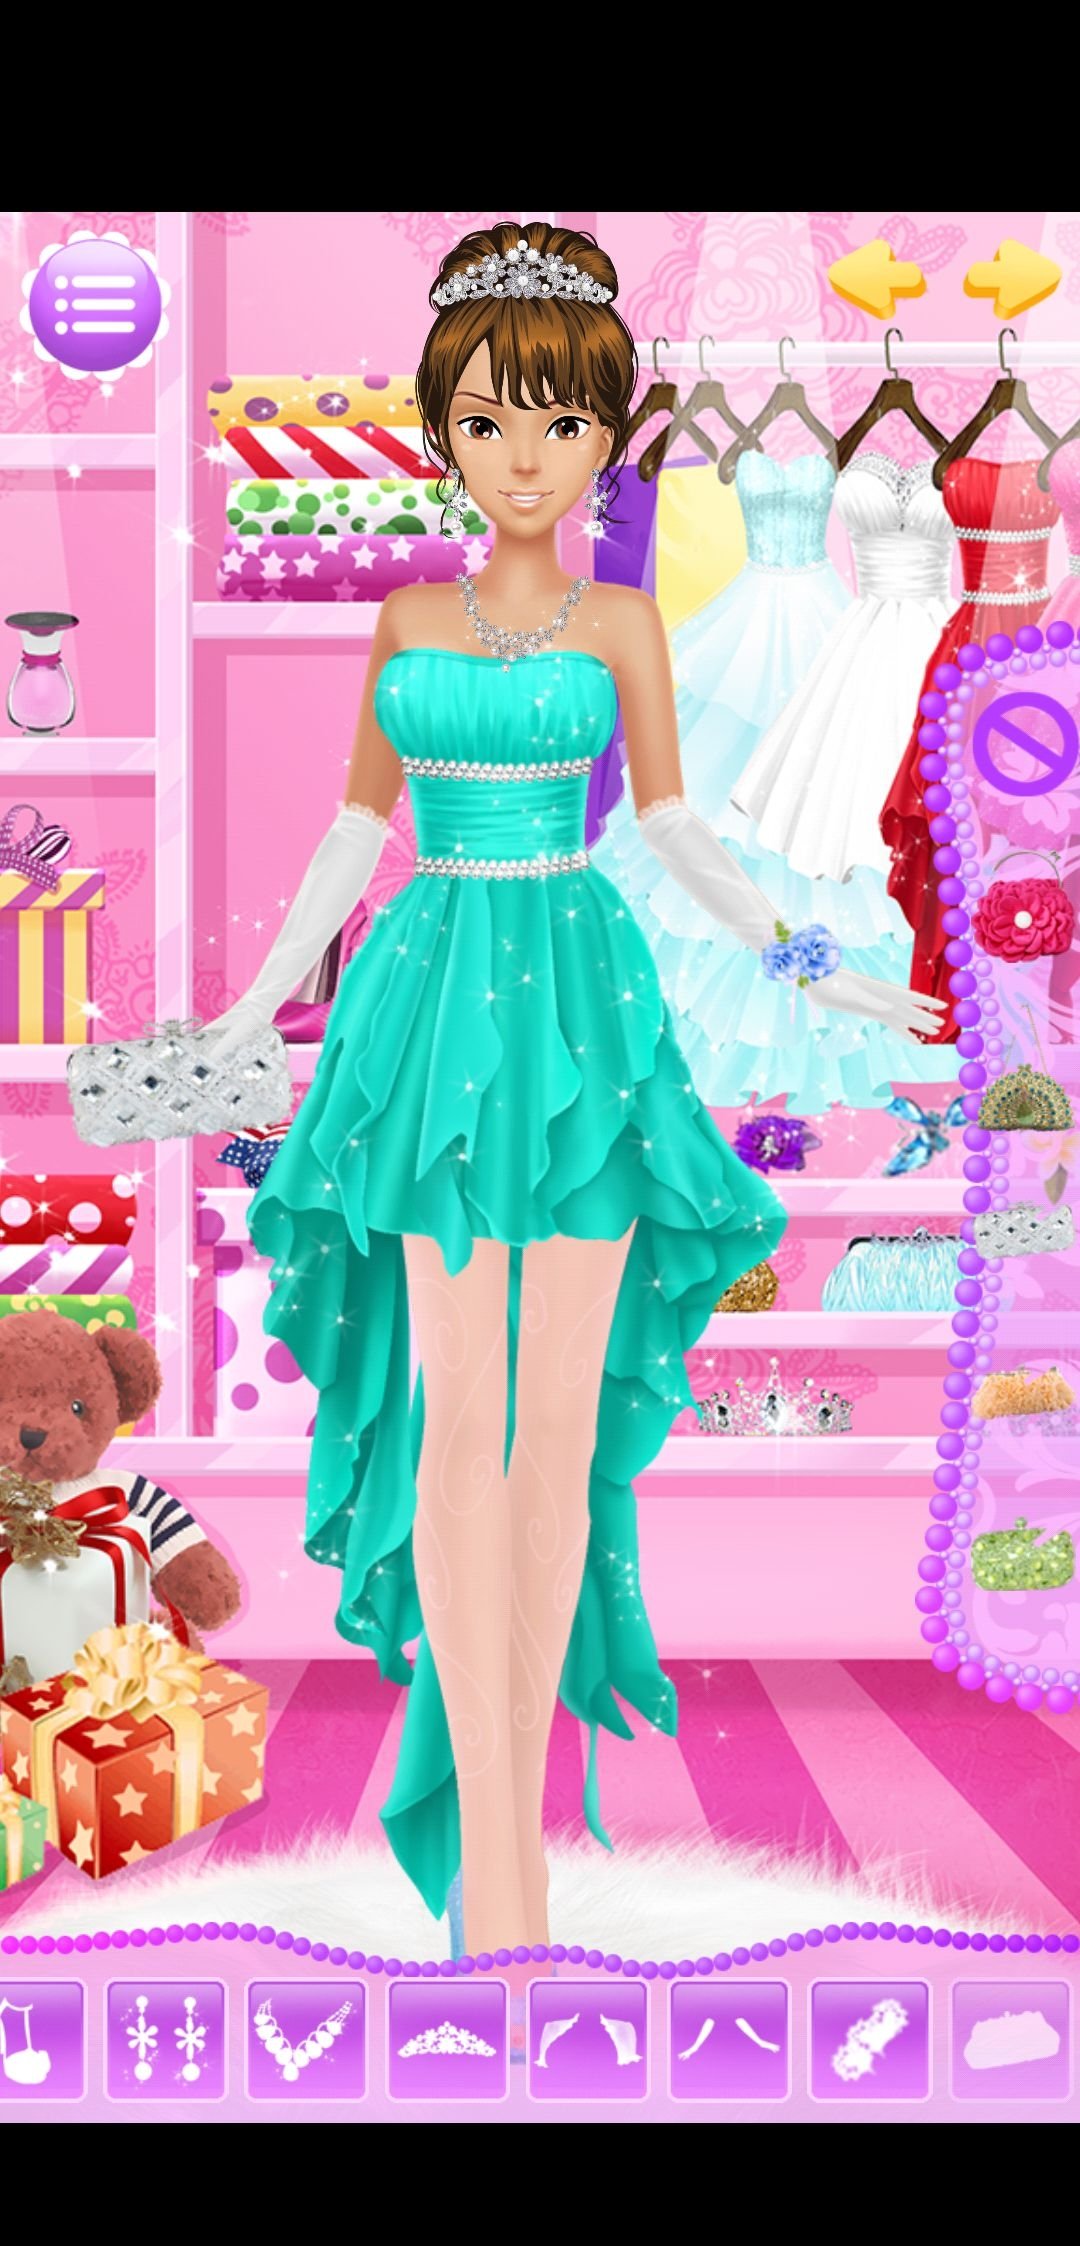 Princess Salon APK download - Princess Salon for Android Free